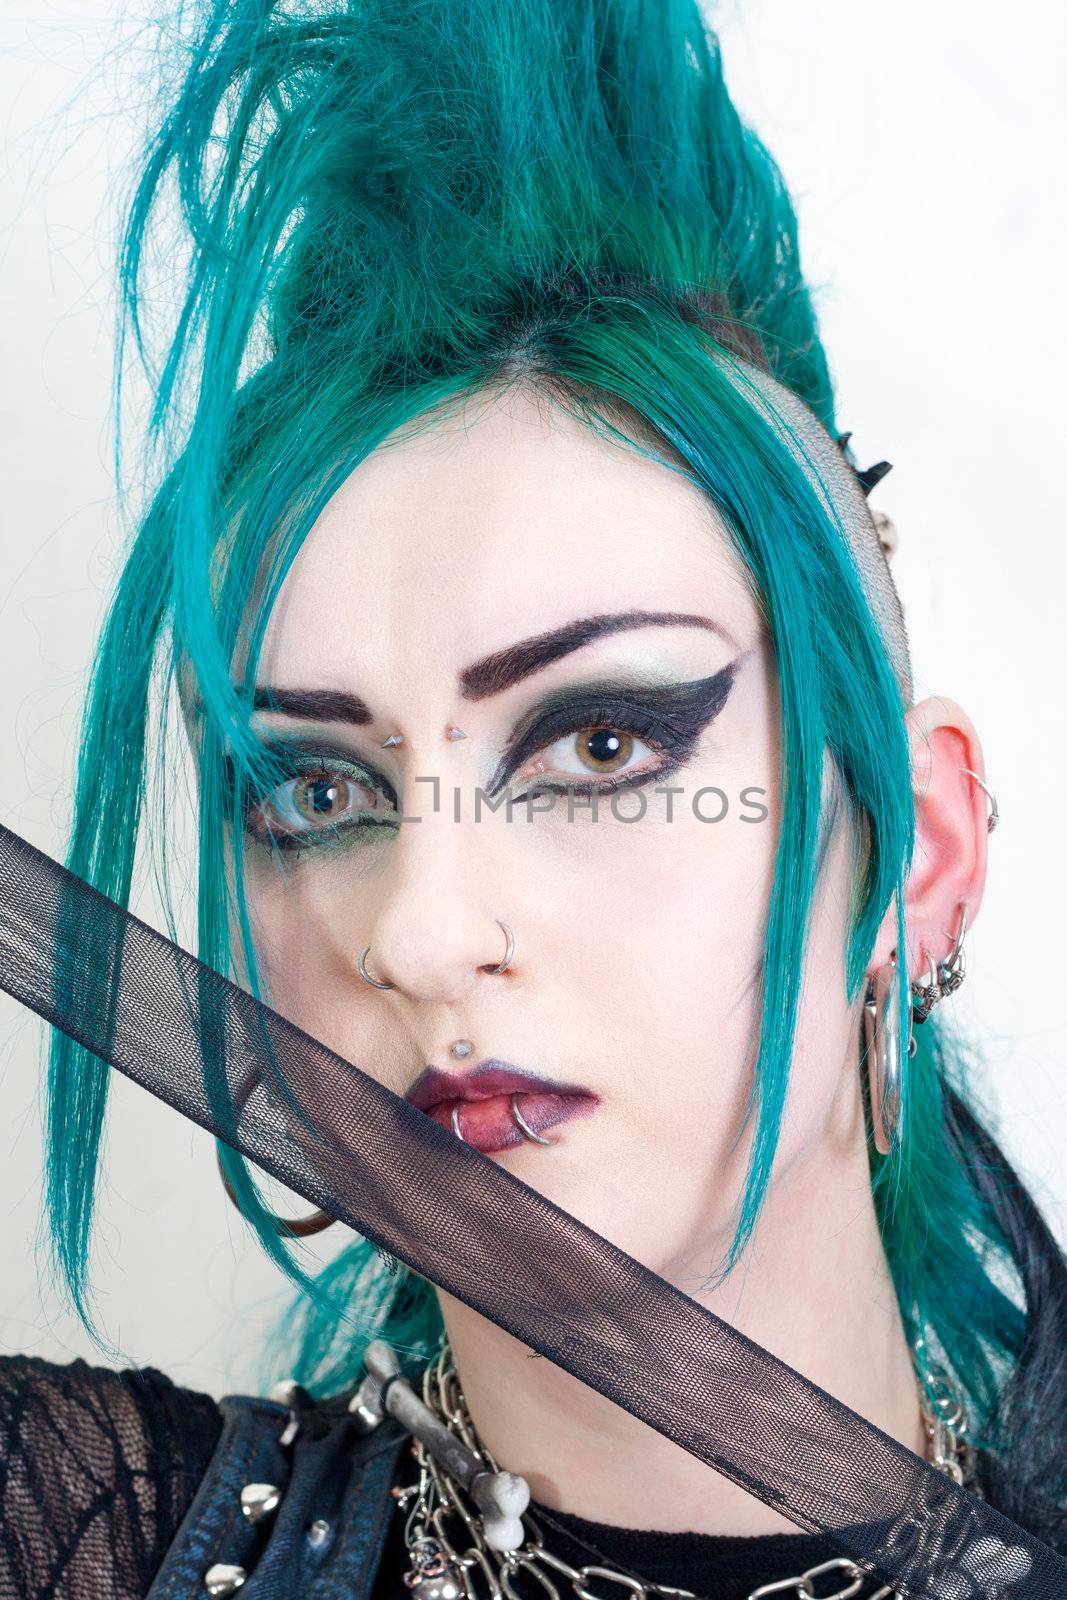 green haired postpunk girl on white background